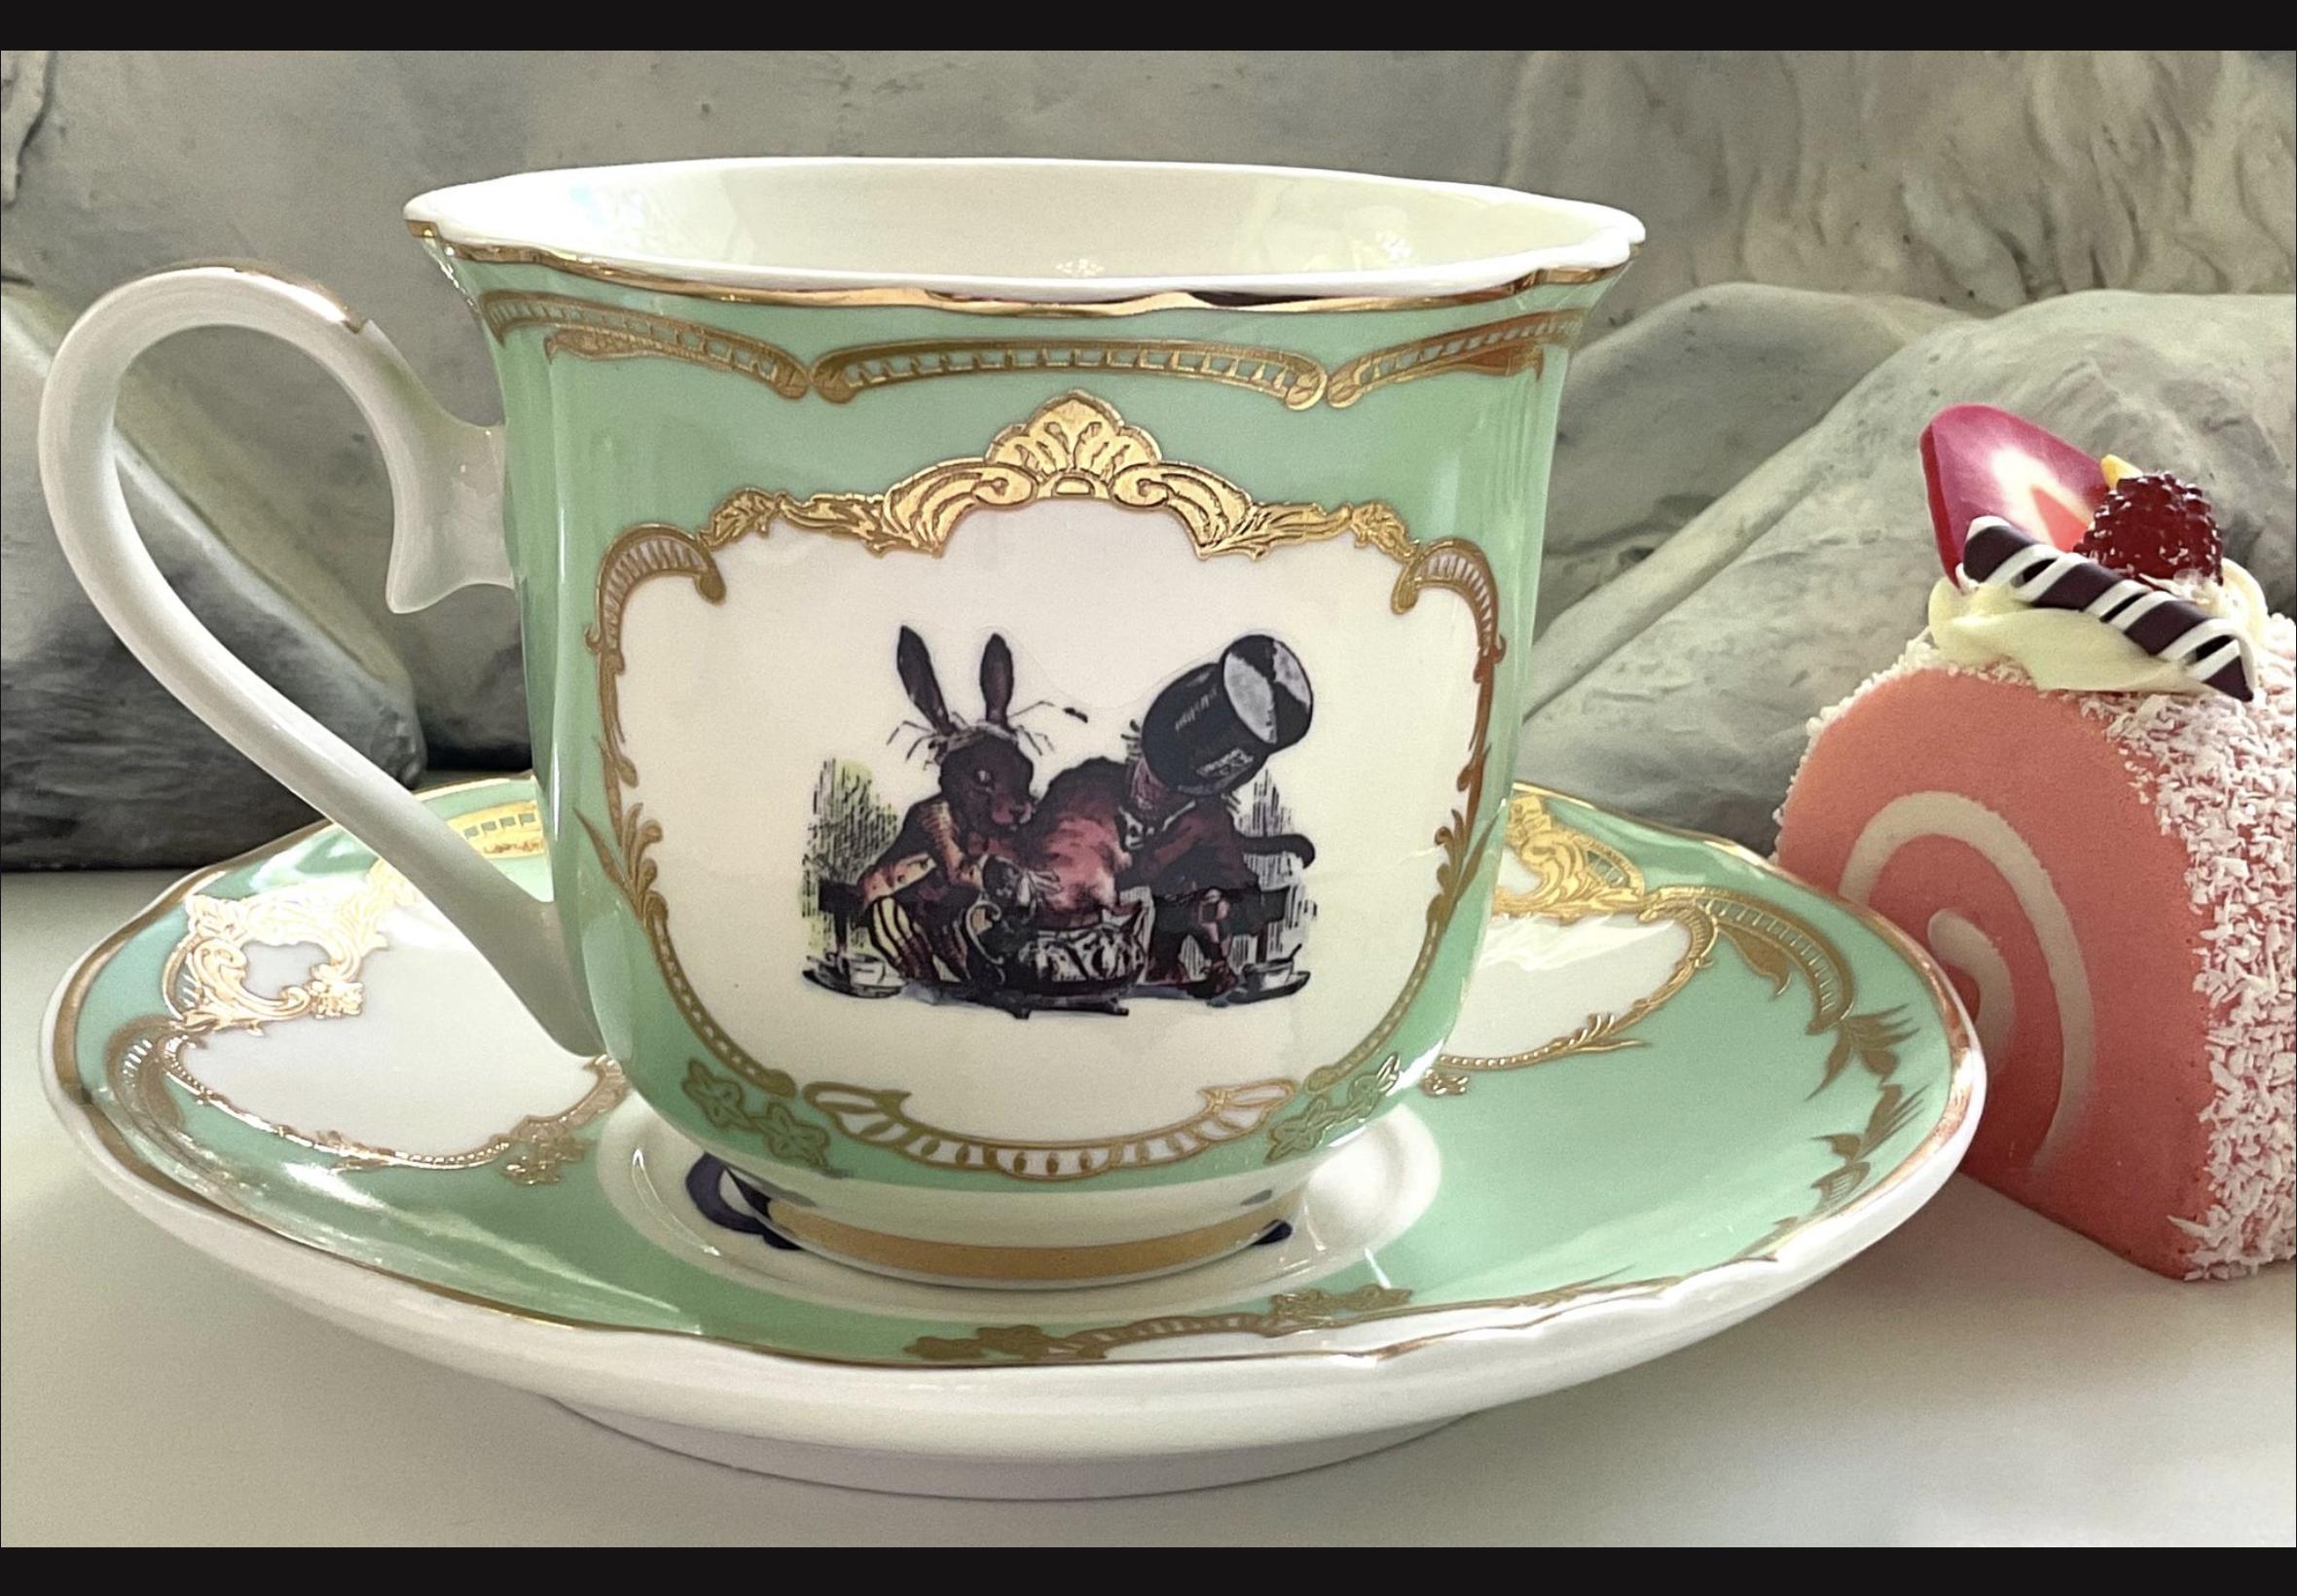 Platinum Brand Events, LLC - Floating tea cups! Alice in wonderland  inspired centerpieces.